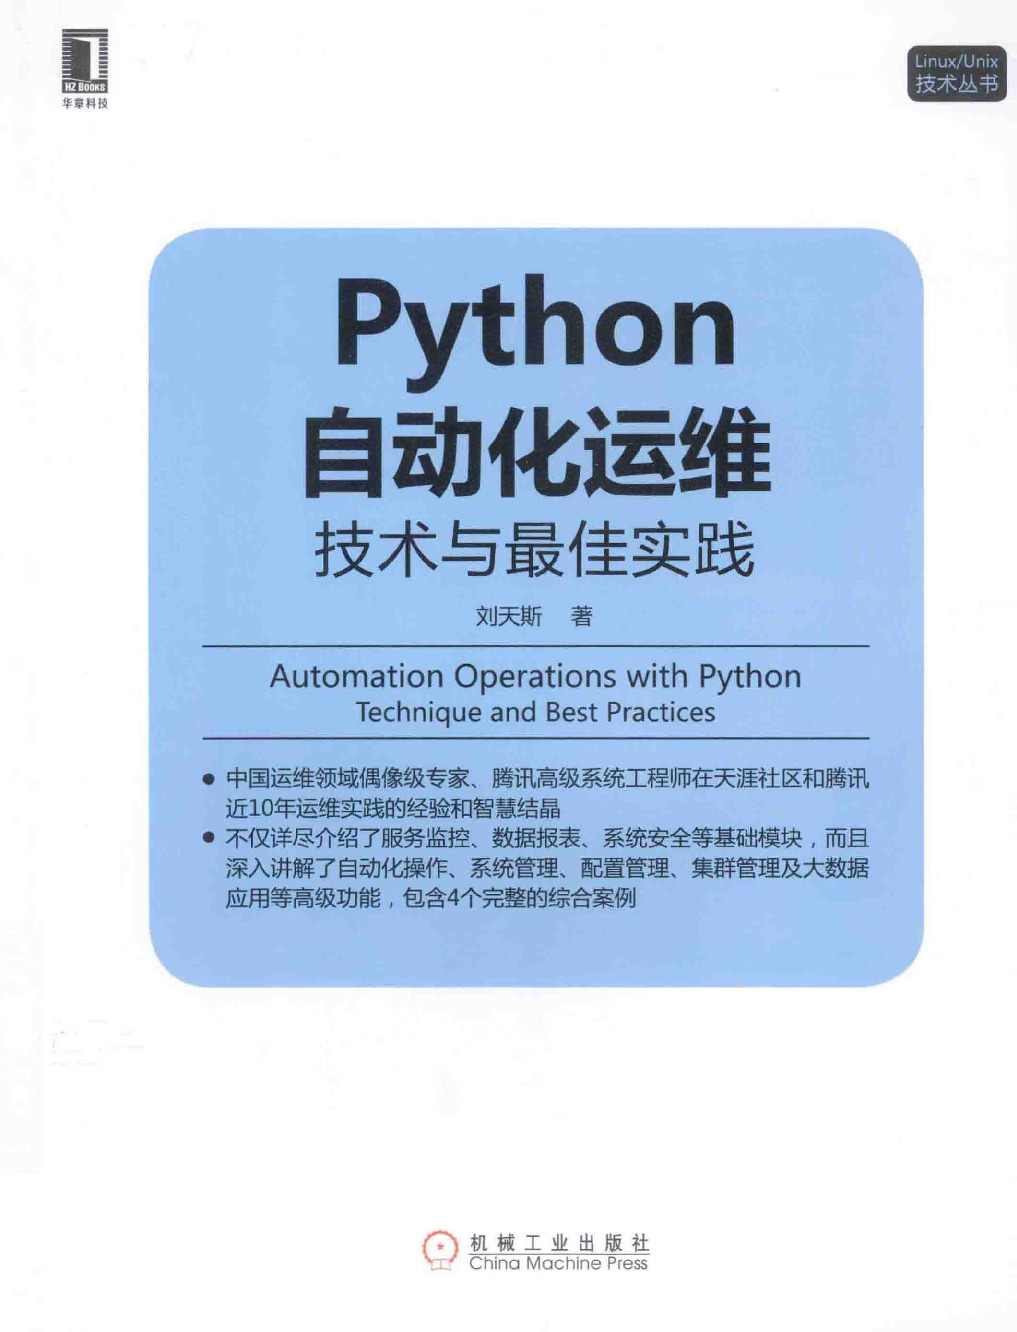 Python自动化运维  技术与最佳实践